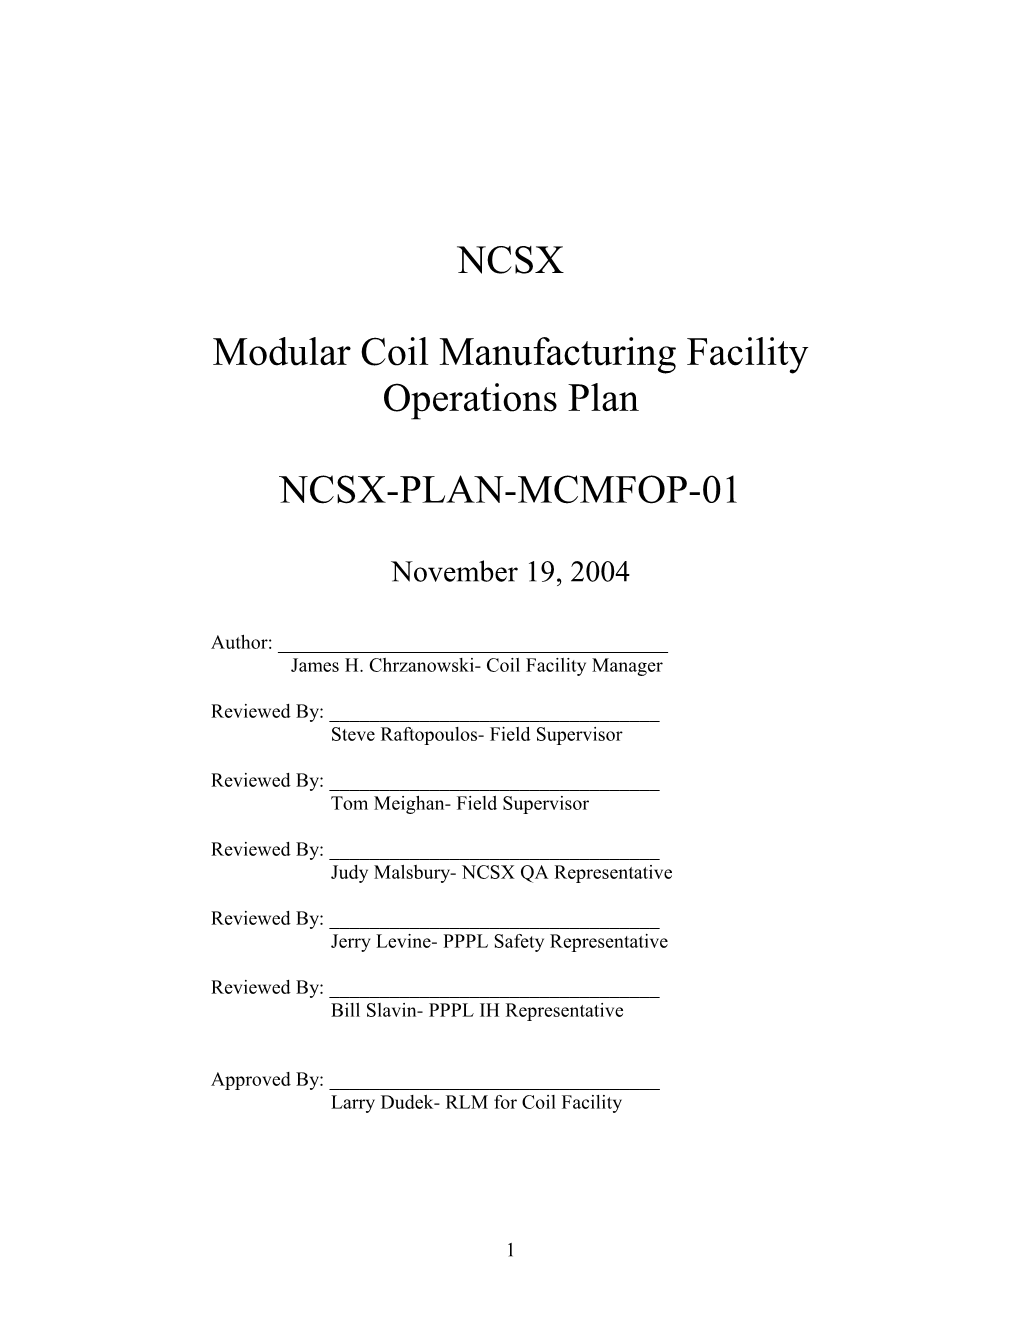 Modular Coil Manufacturing Facility